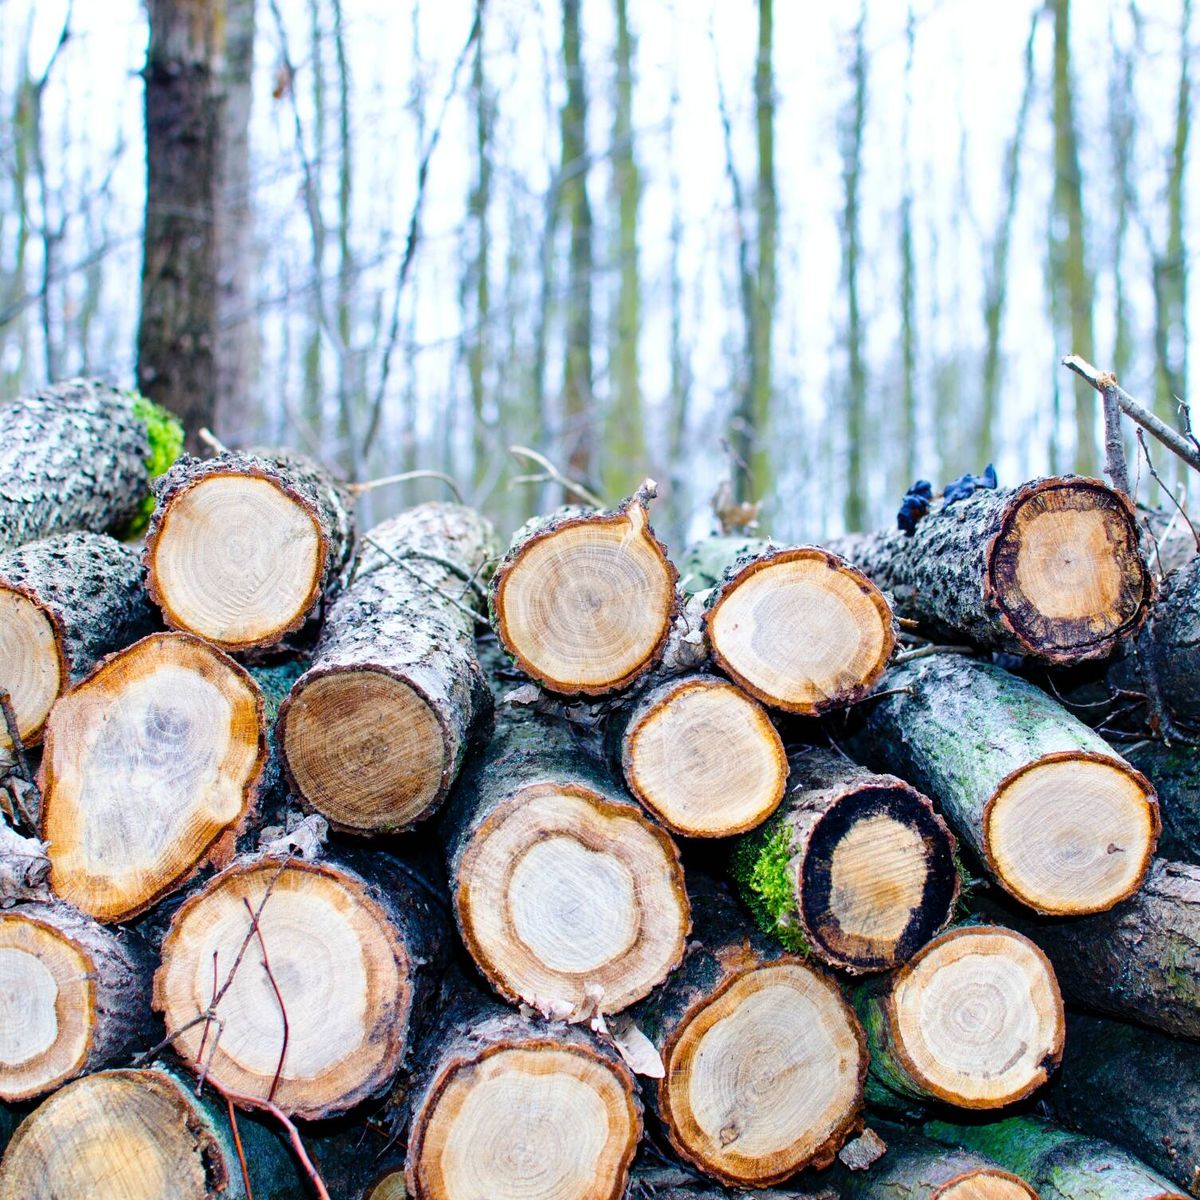 Eureka! Cultivar madera sin talar árboles ya es posible